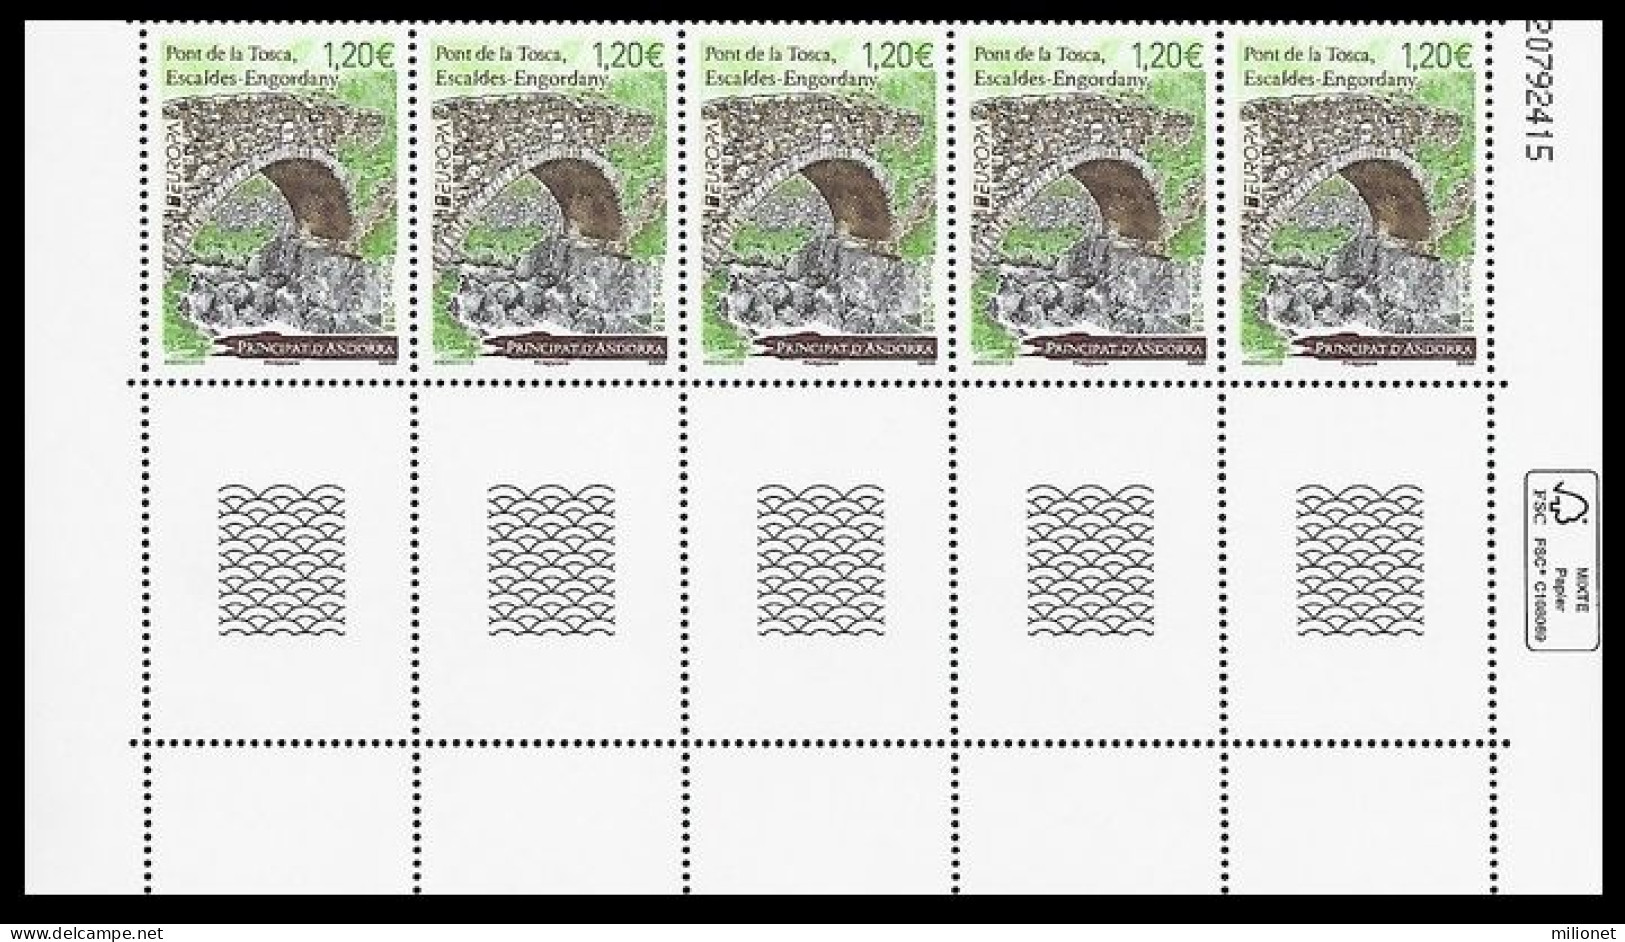 SALE!!! French Andorra Francesa Andorre Französisch Andorra 2018 EUROPA CEPT BRIDGES Block 5 Stamps + 5 Lower Tabs MNH** - 2018